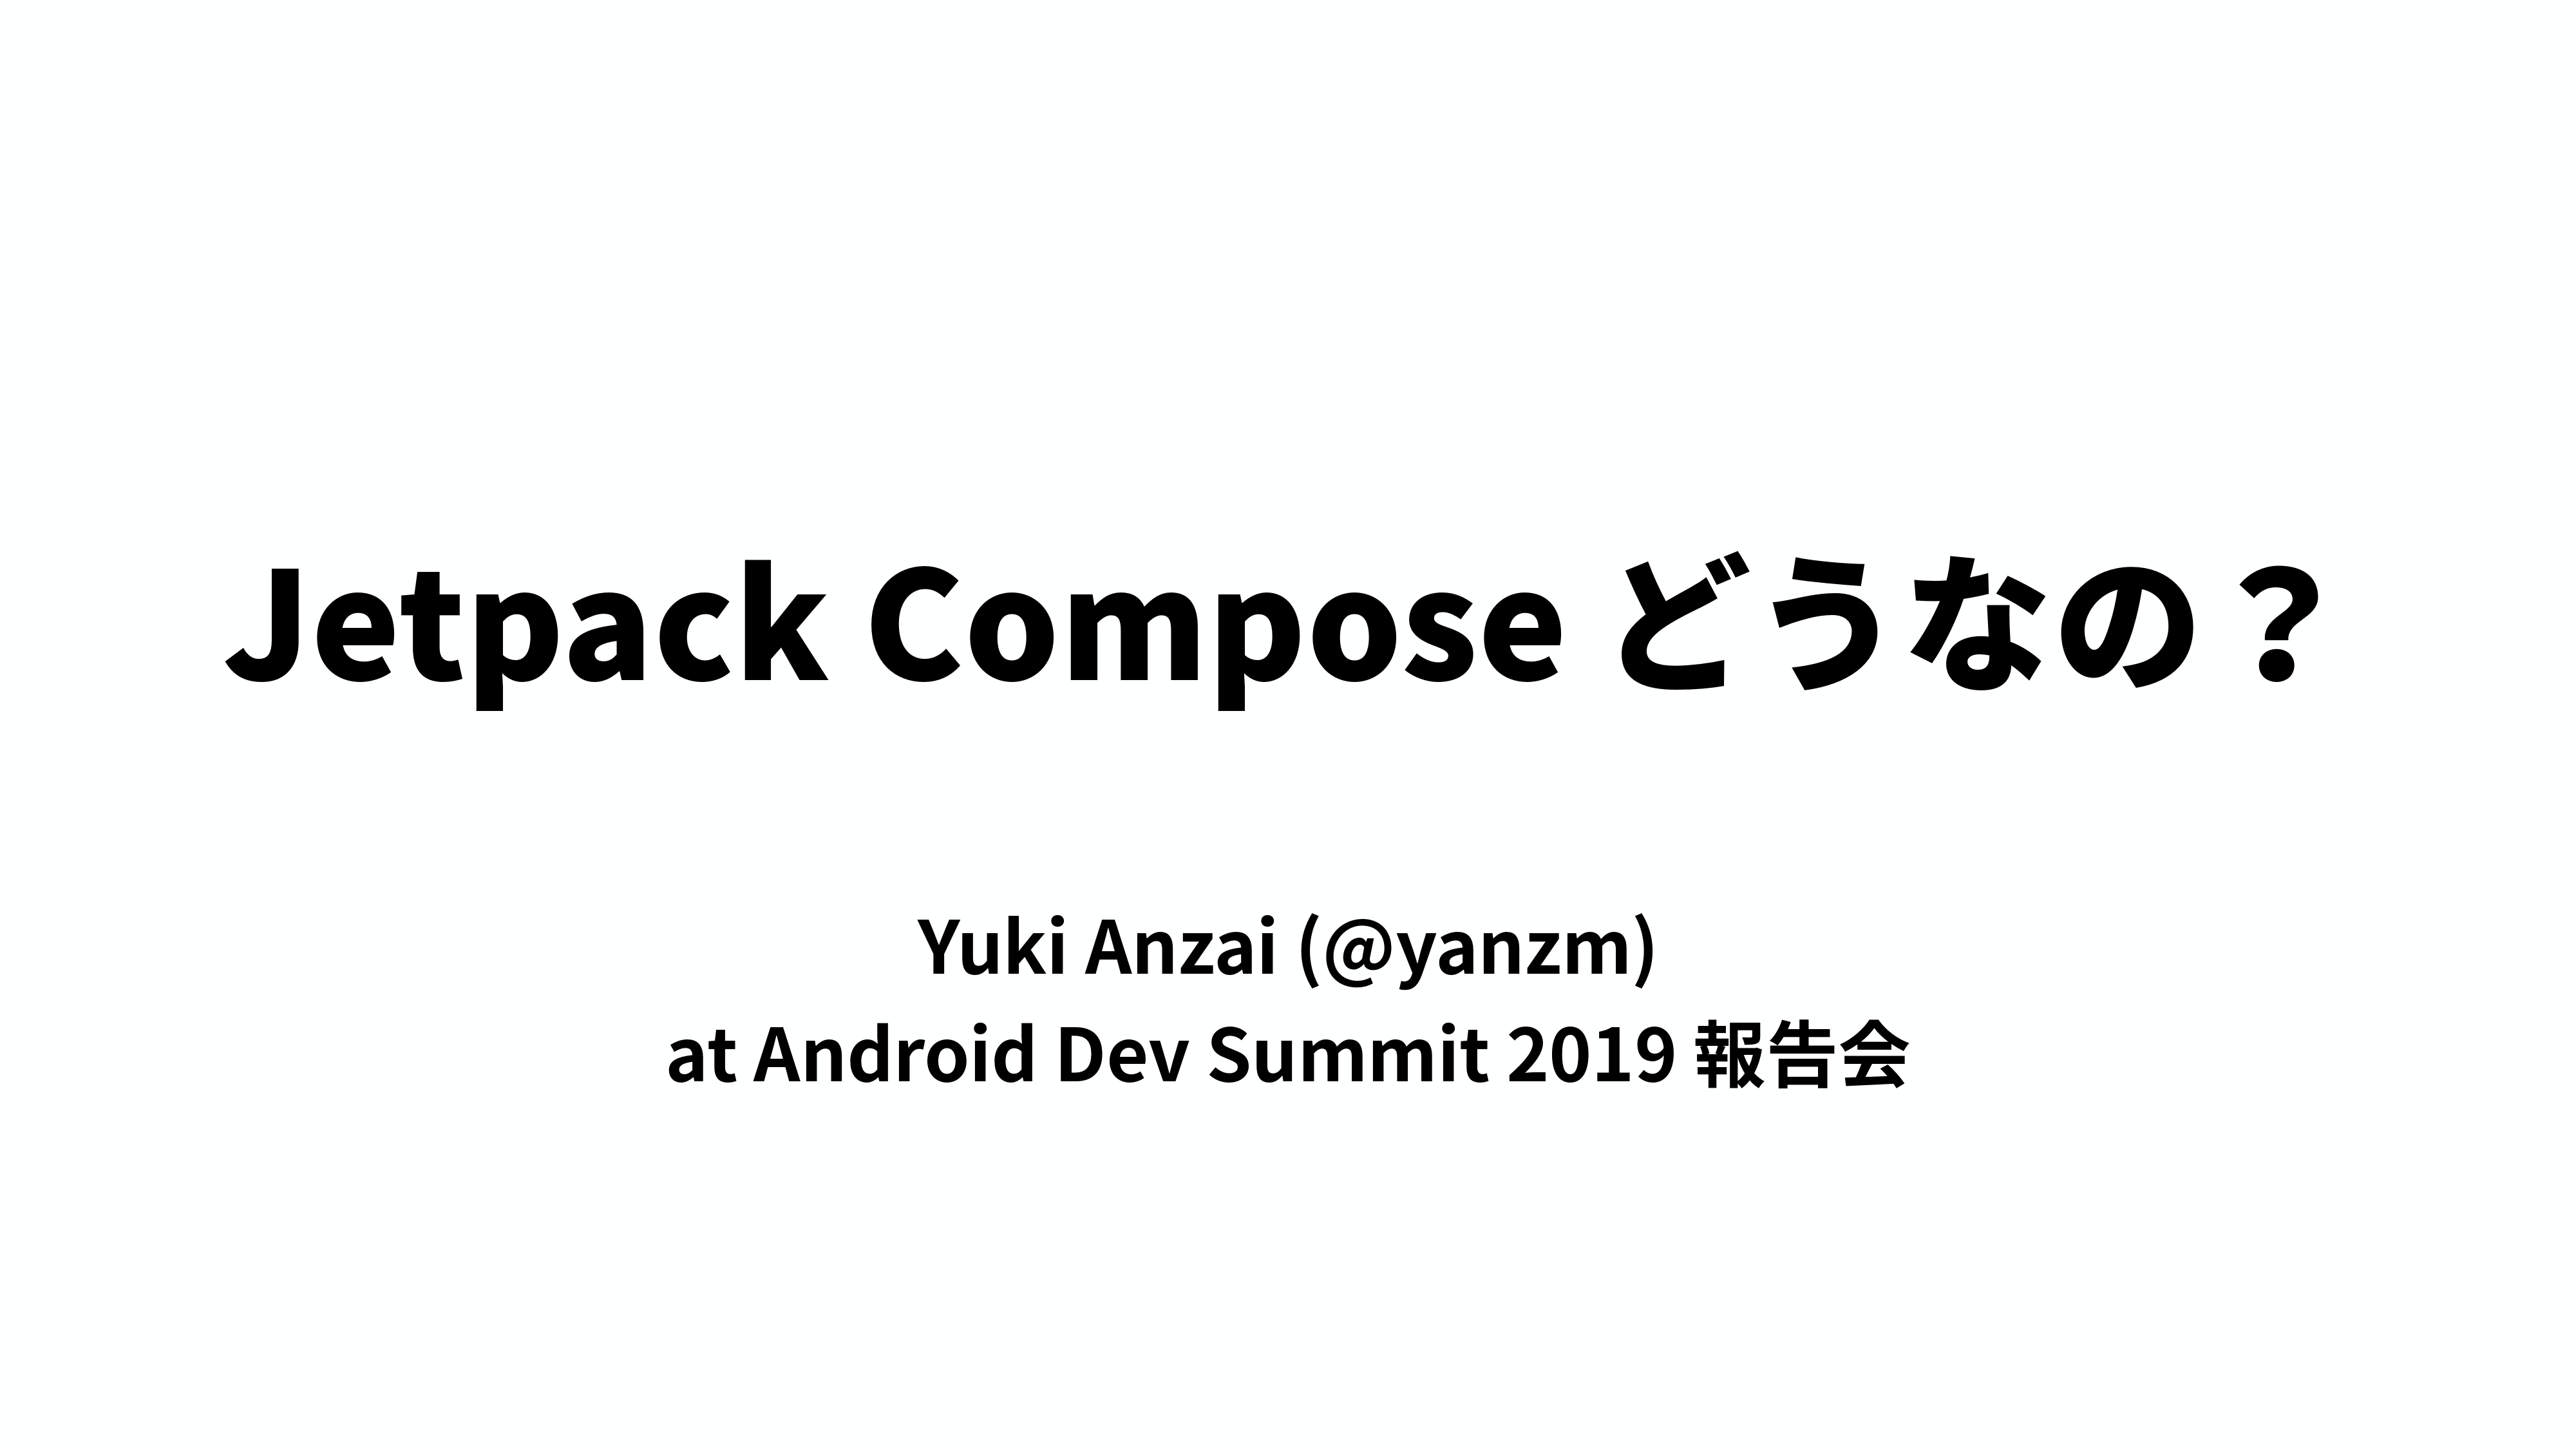 Jetpack Compose どうなの？（Android Dev Summit 2019報告会）by Yuki Anzai